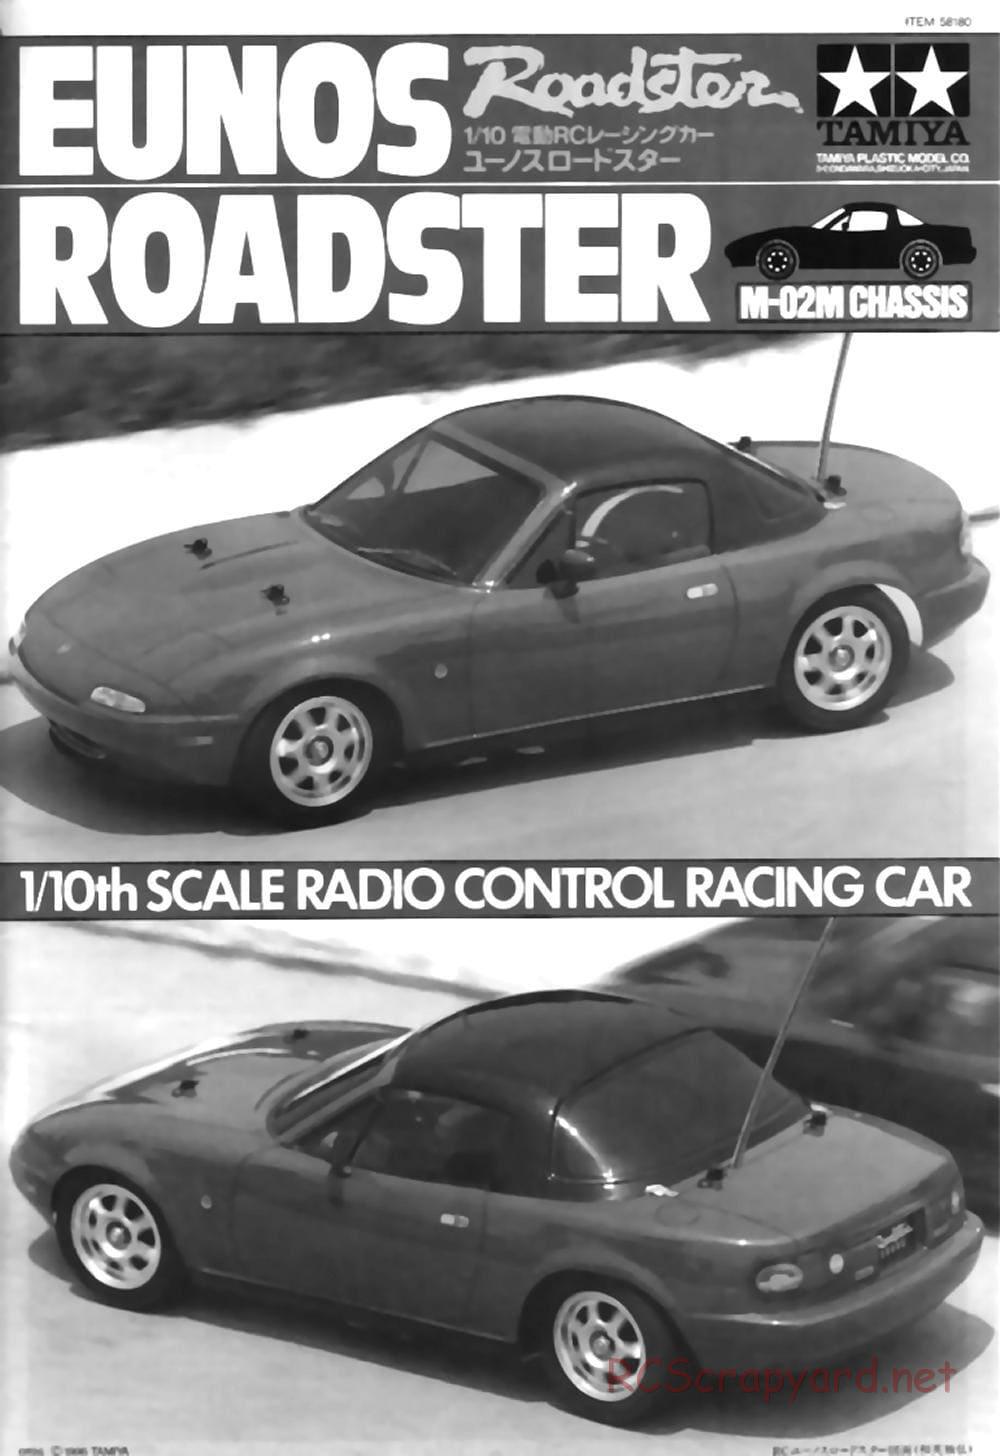 Tamiya - Eunos Roadster - M02M Chassis - Manual - Page 1